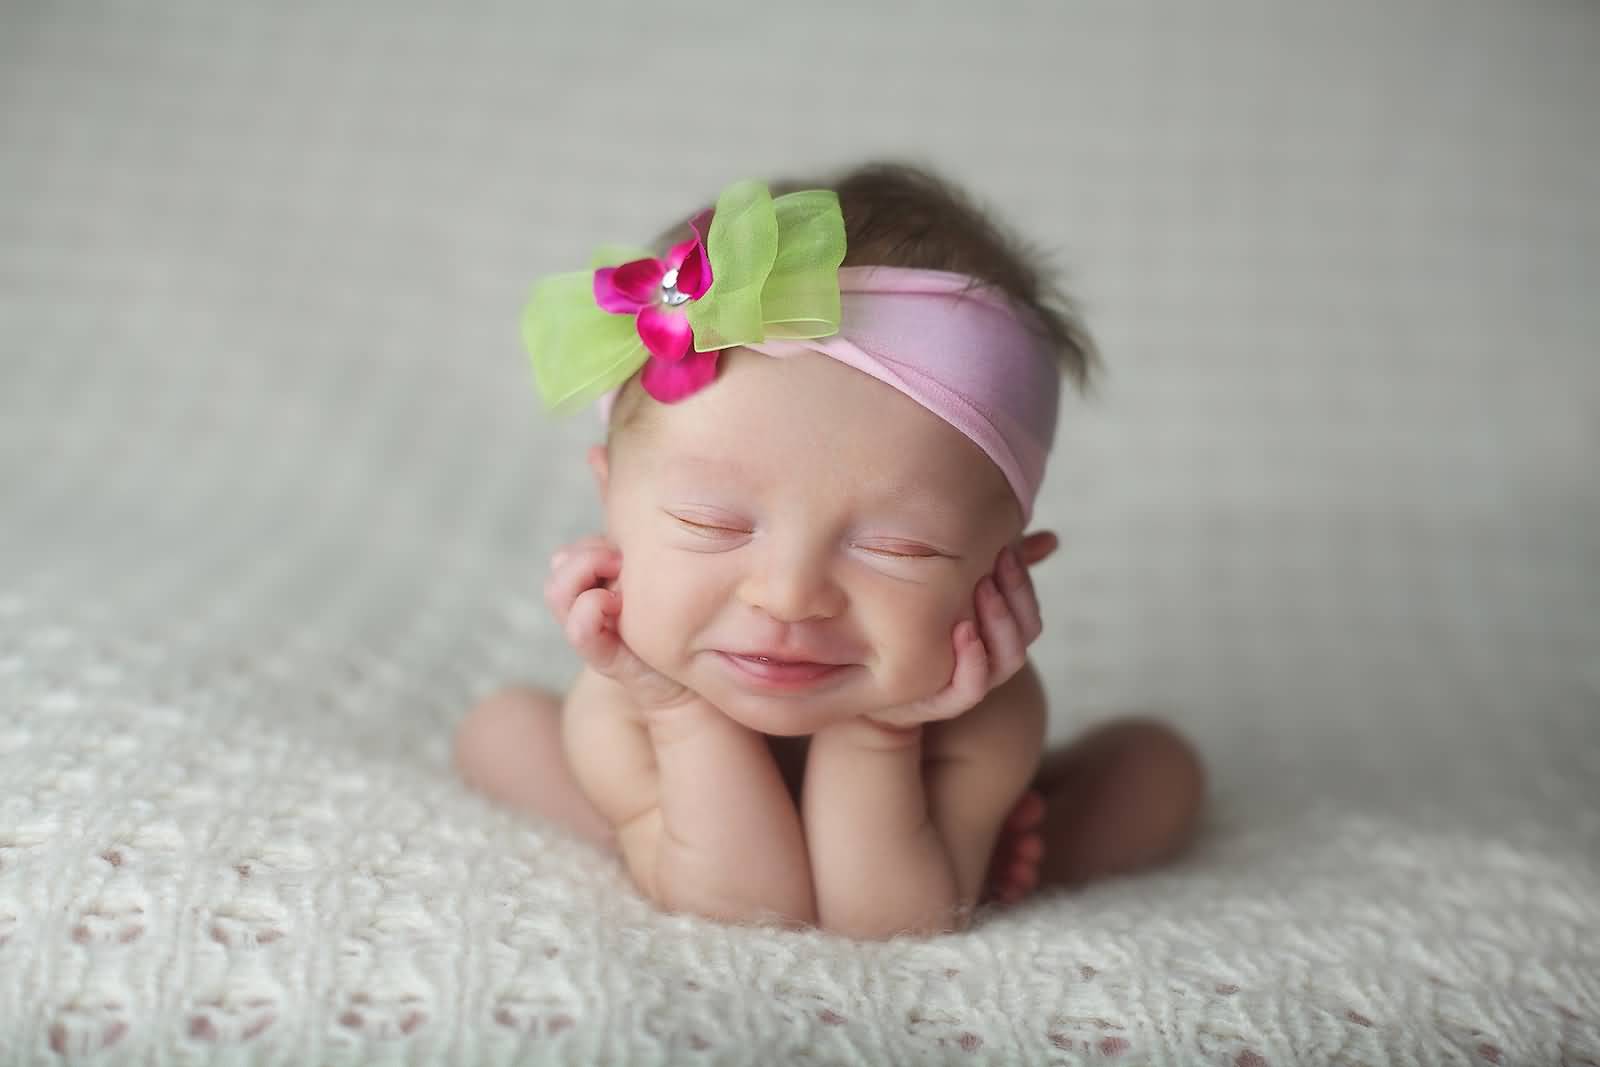 Cute Funny Baby Girl Sleeeping Photo